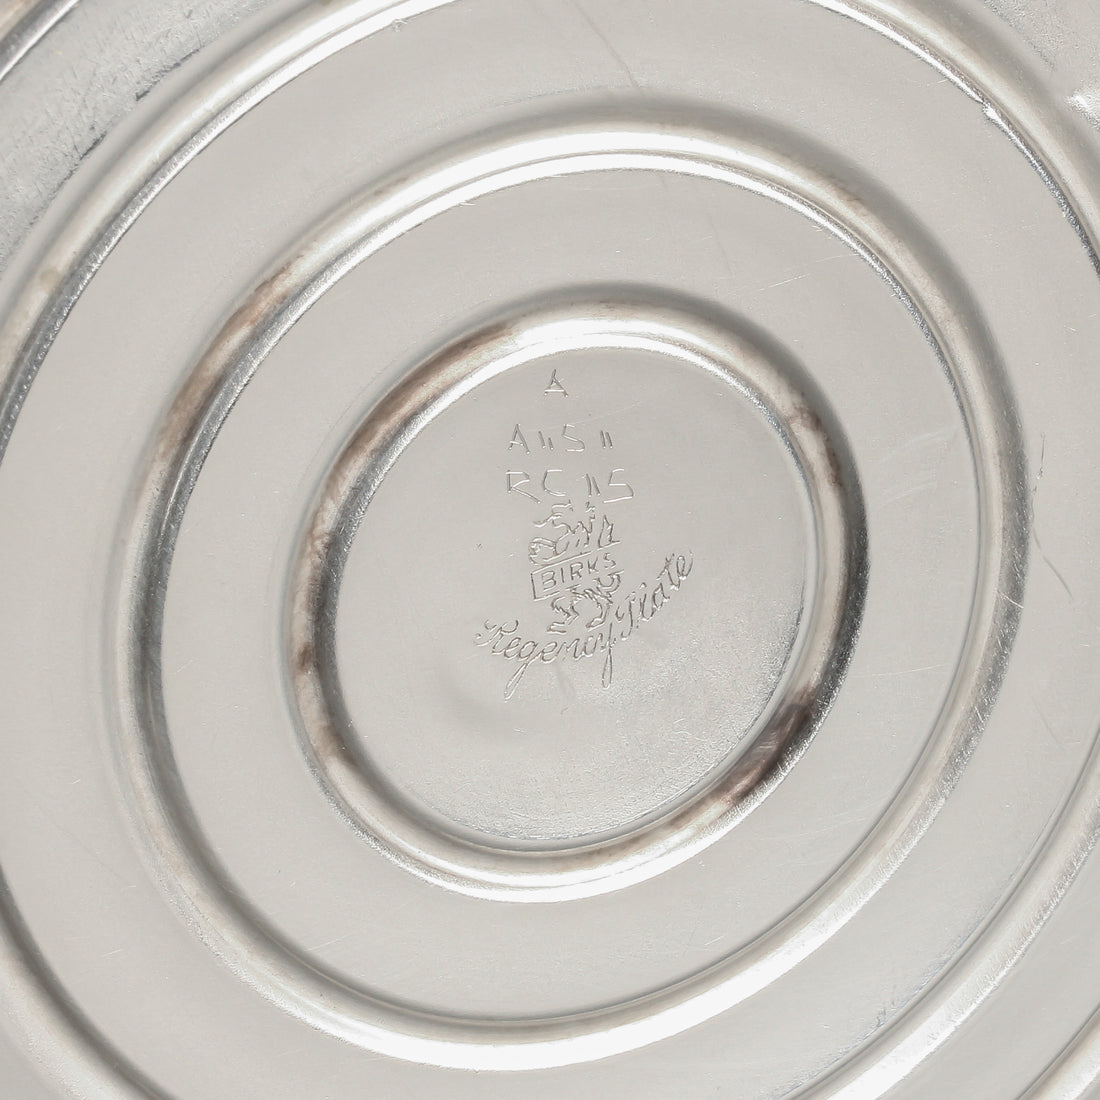 BIRKS Regency Plate Silverplate 3-Light Candelabra - Set of 2